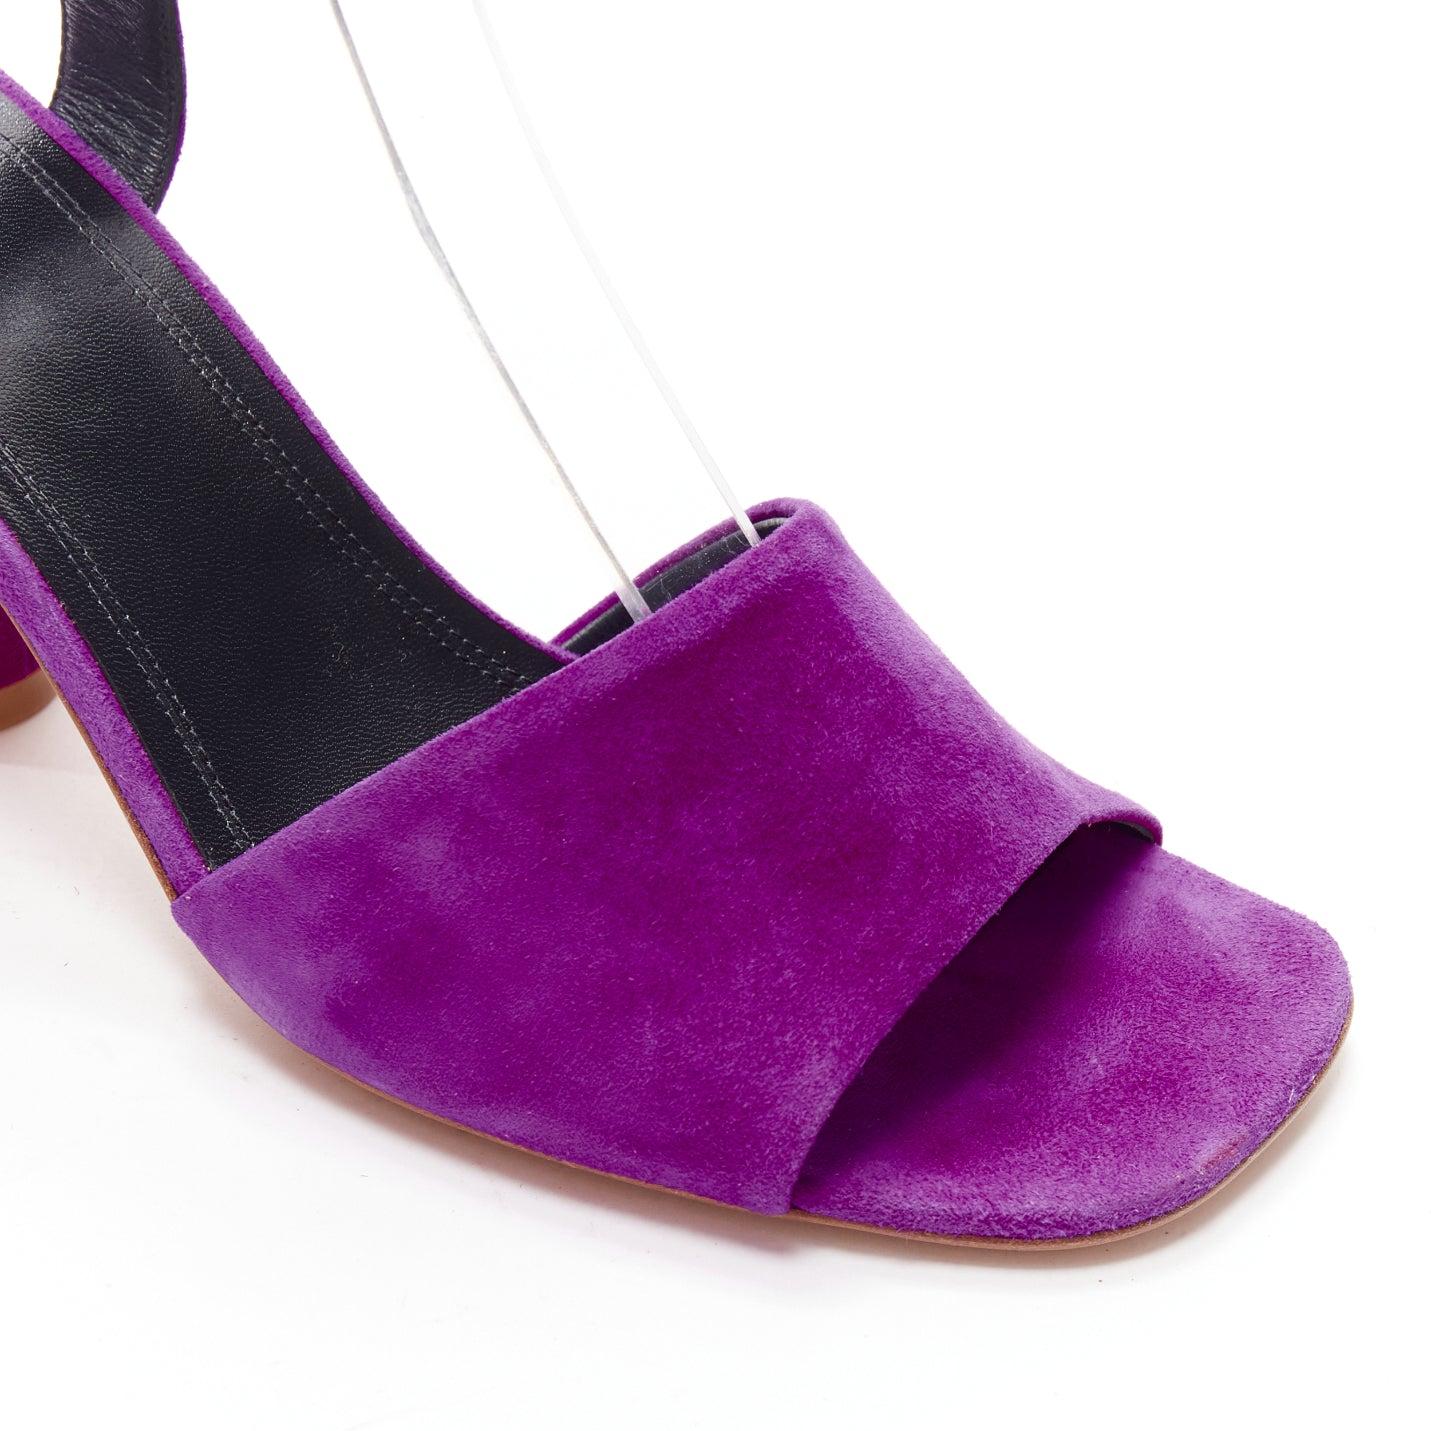 OLD CELINE Phoebe Philo purple suede gold buckle strappy sandal heels EU38 1